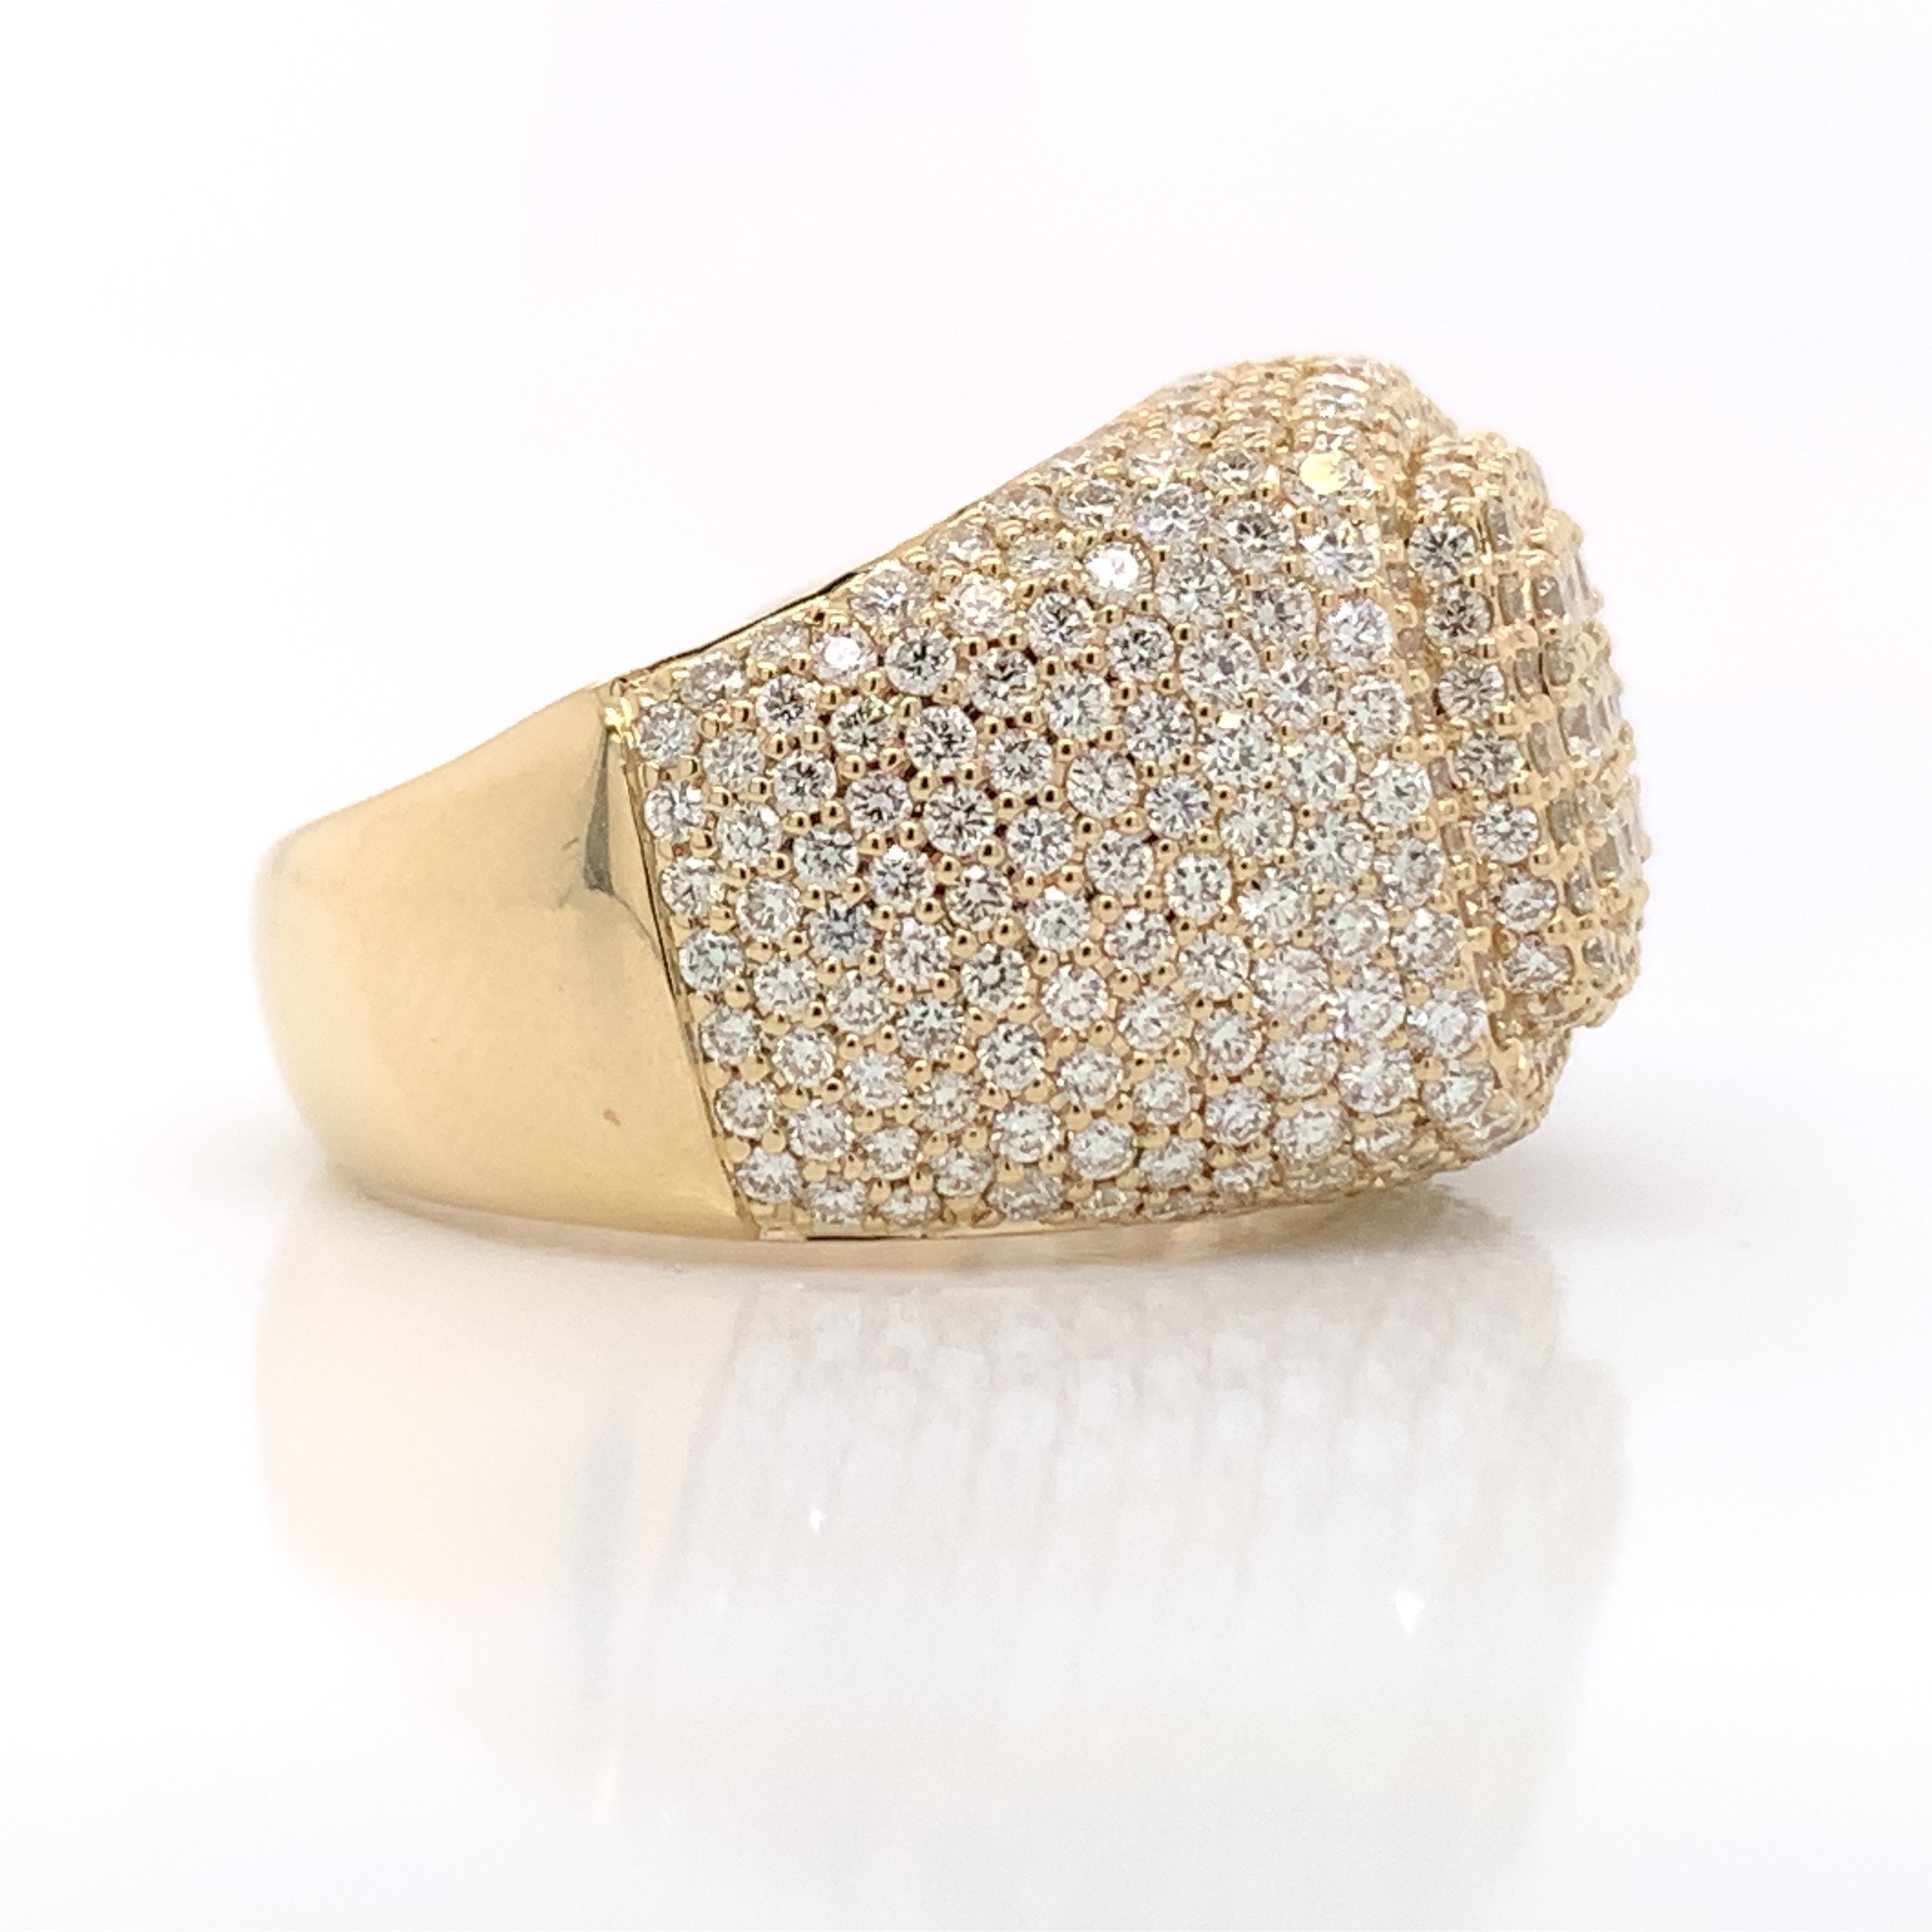 Copy of 2.50 CT. Diamond Ring 10KT Gold - White Carat Diamonds 